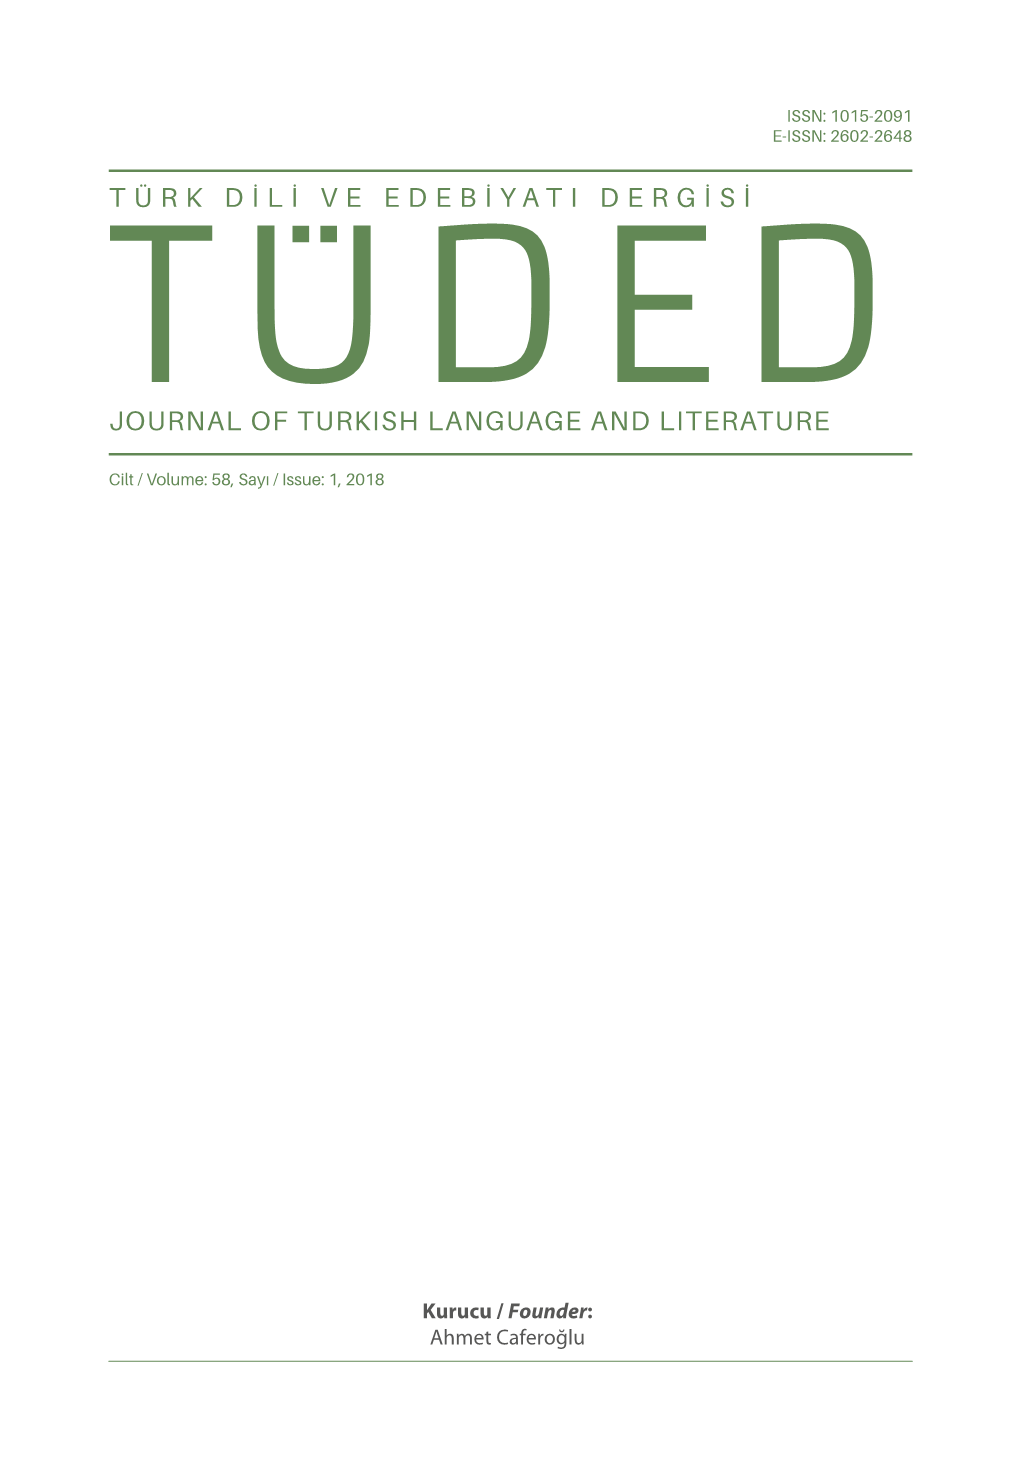 Tudedjournal of Turkish Language and Literature